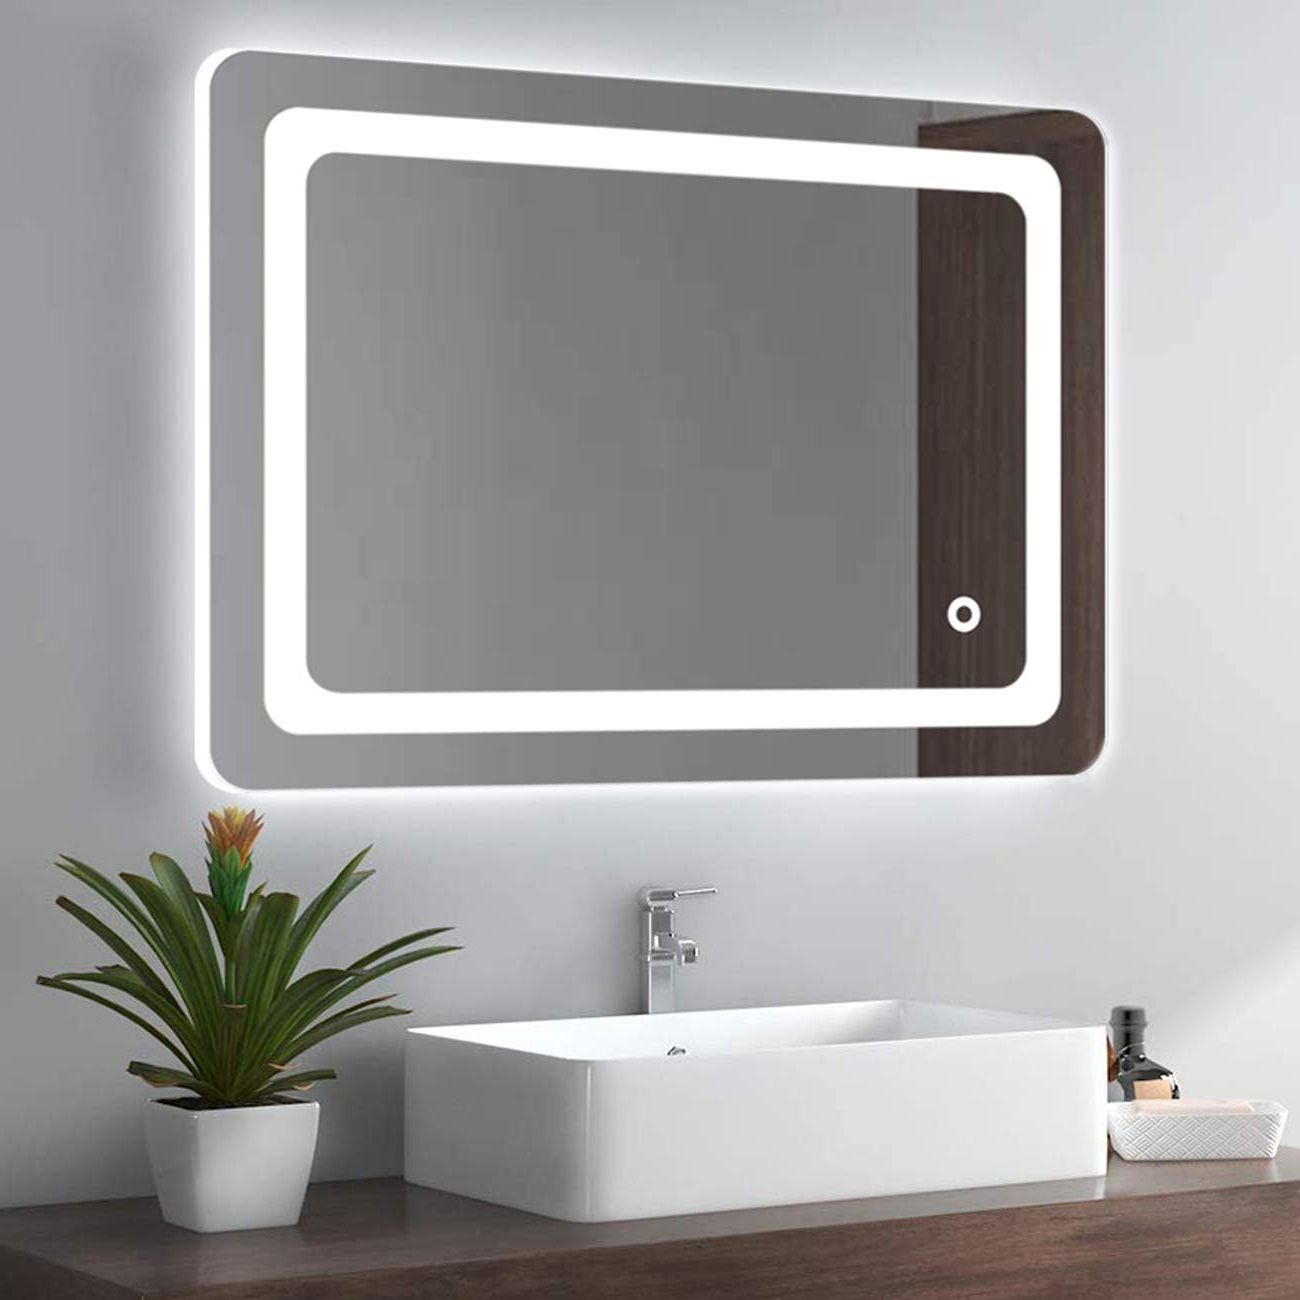 Led Backlit Vanity Mirrors For Current Bathroom Mirror Led Light Touch Sensor Frameless Mounted Backlit Makeup (View 8 of 15)